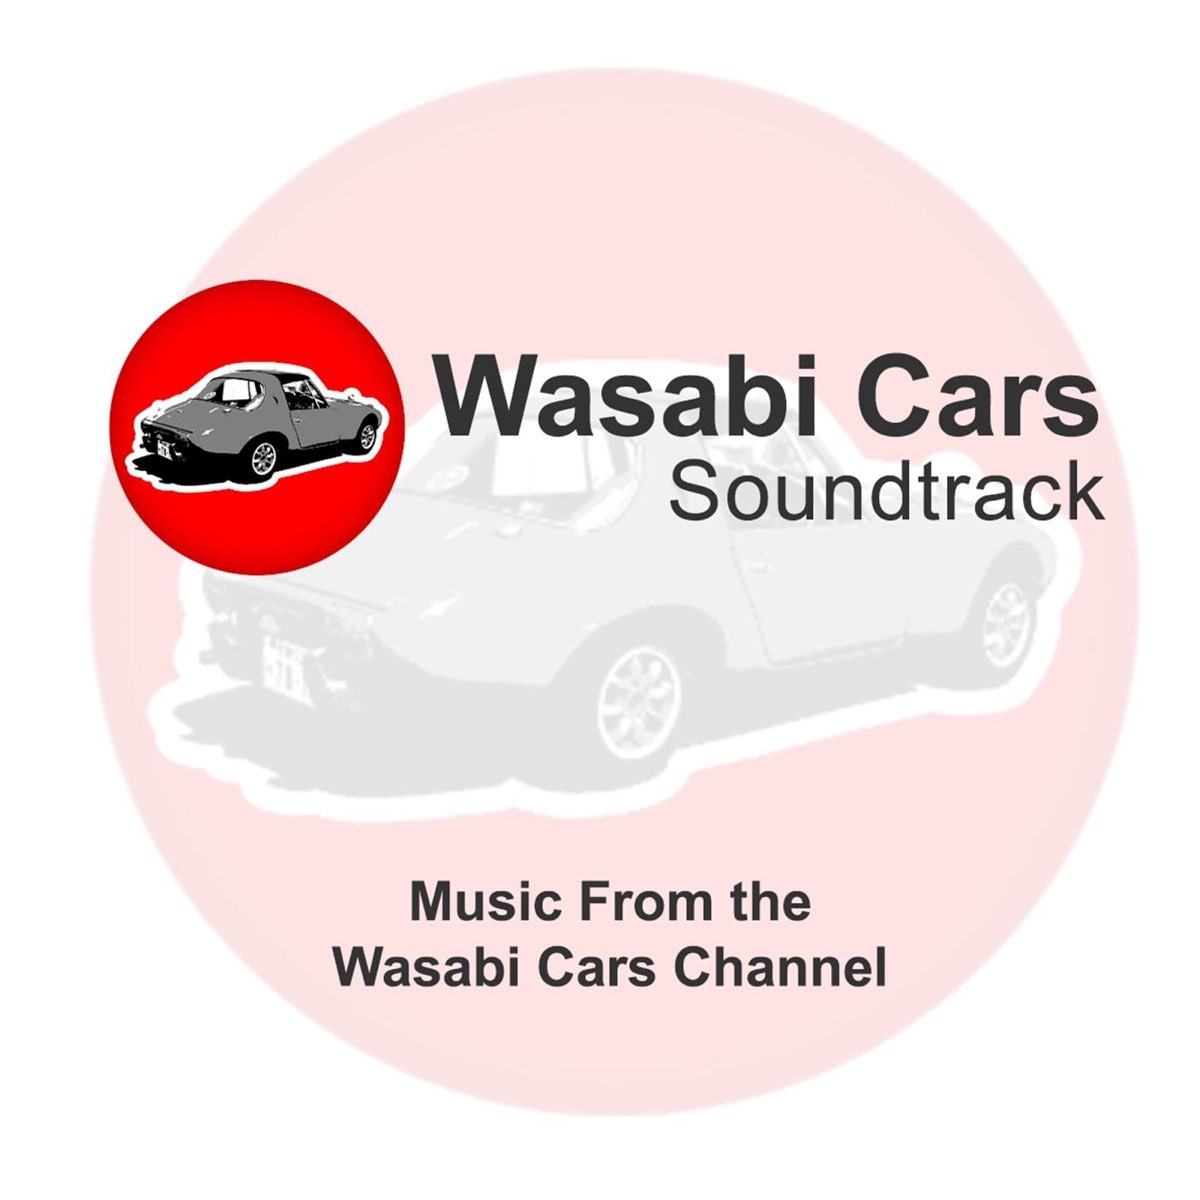 Саундтрек васаби. Автомобиль васаби. Wasabi cars.